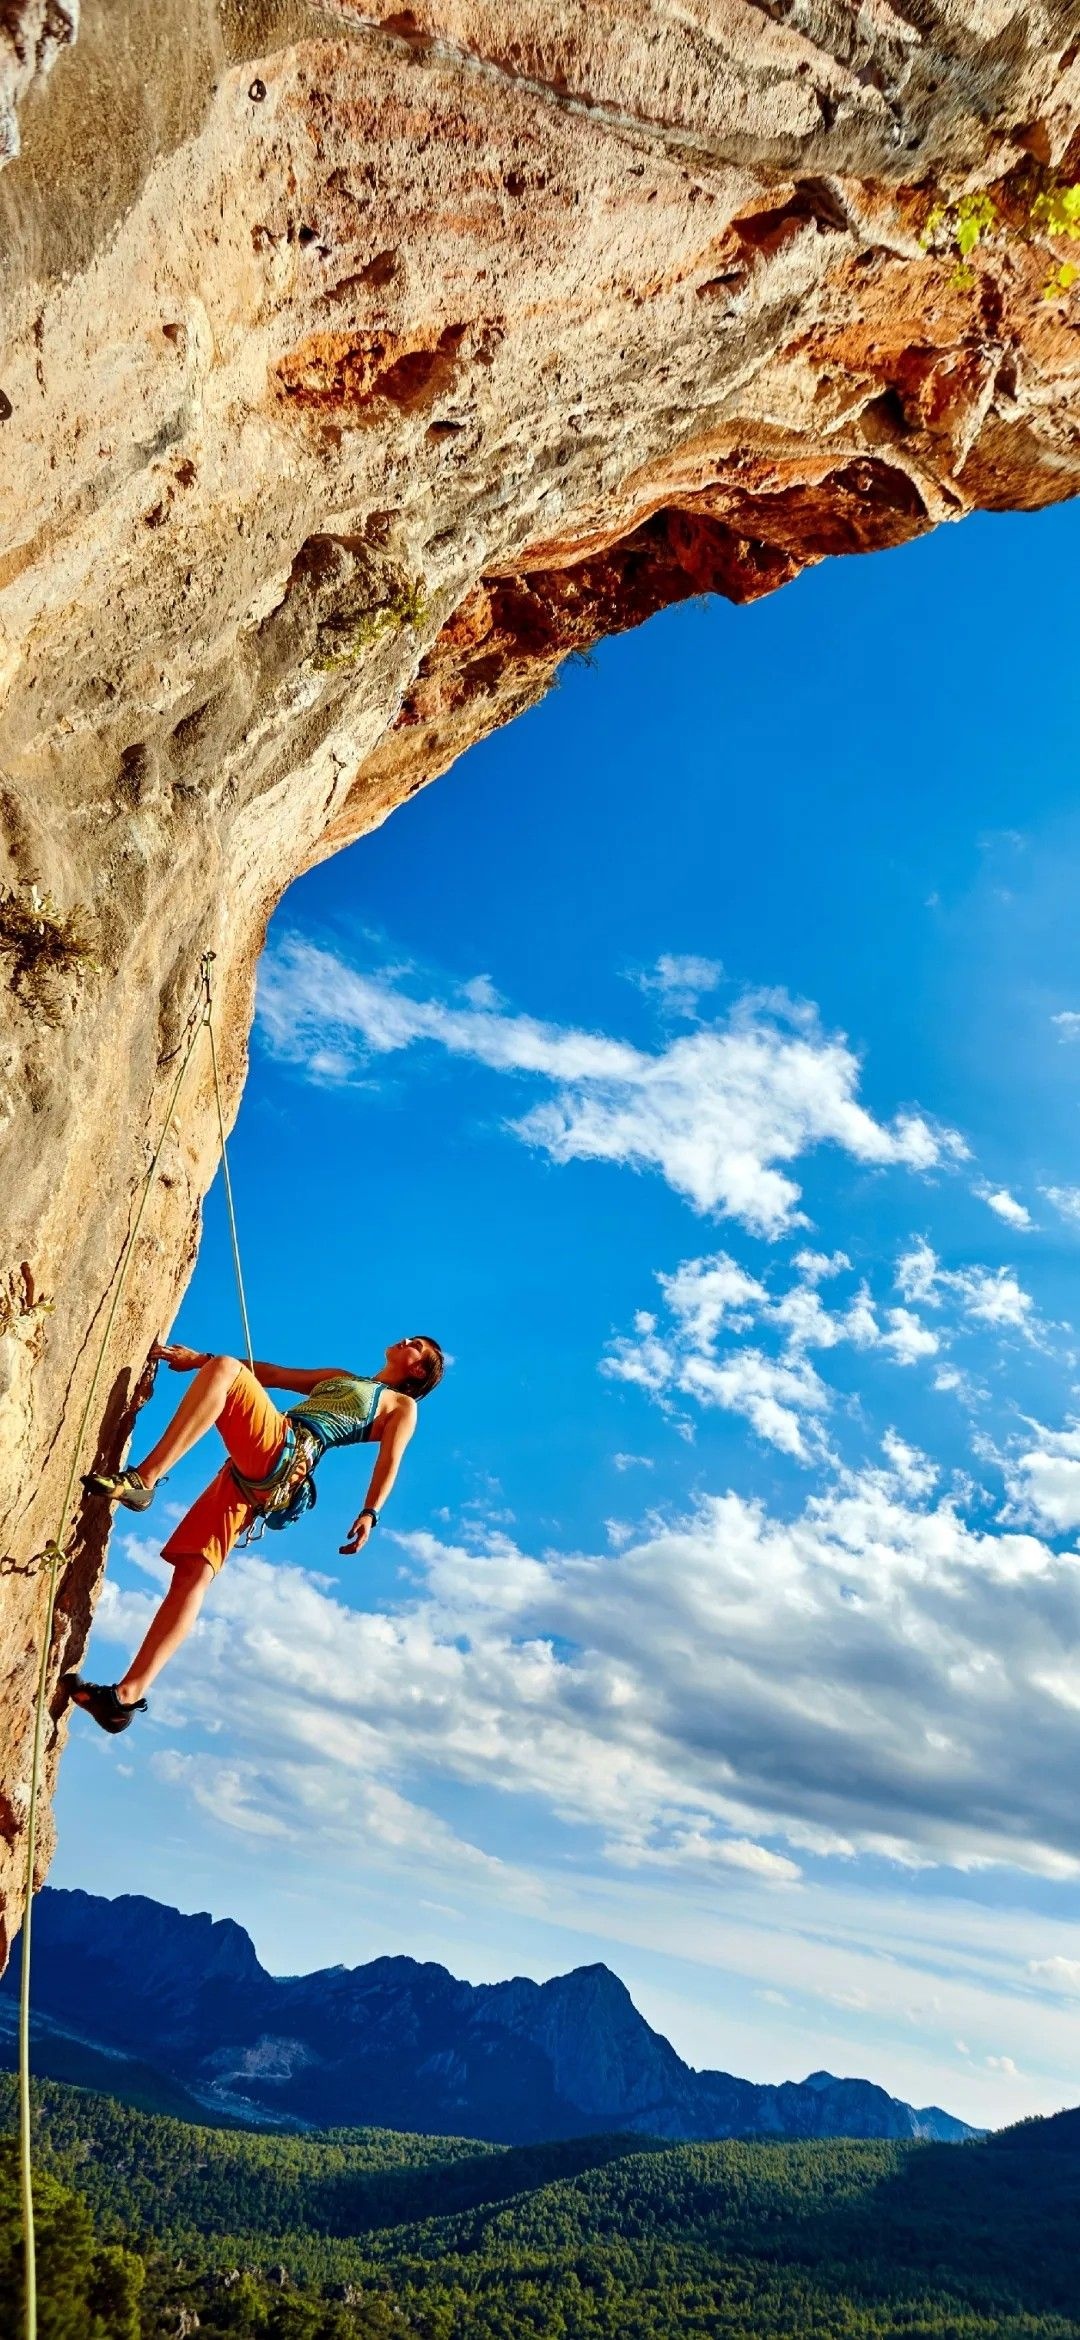 Rock Climbing: Proper Belay Stance, Hand Position, PBUS (Pull, Brake, Under, Slide) Technique, Summer Programs At International Rock Climbing School. 1080x2340 HD Background.